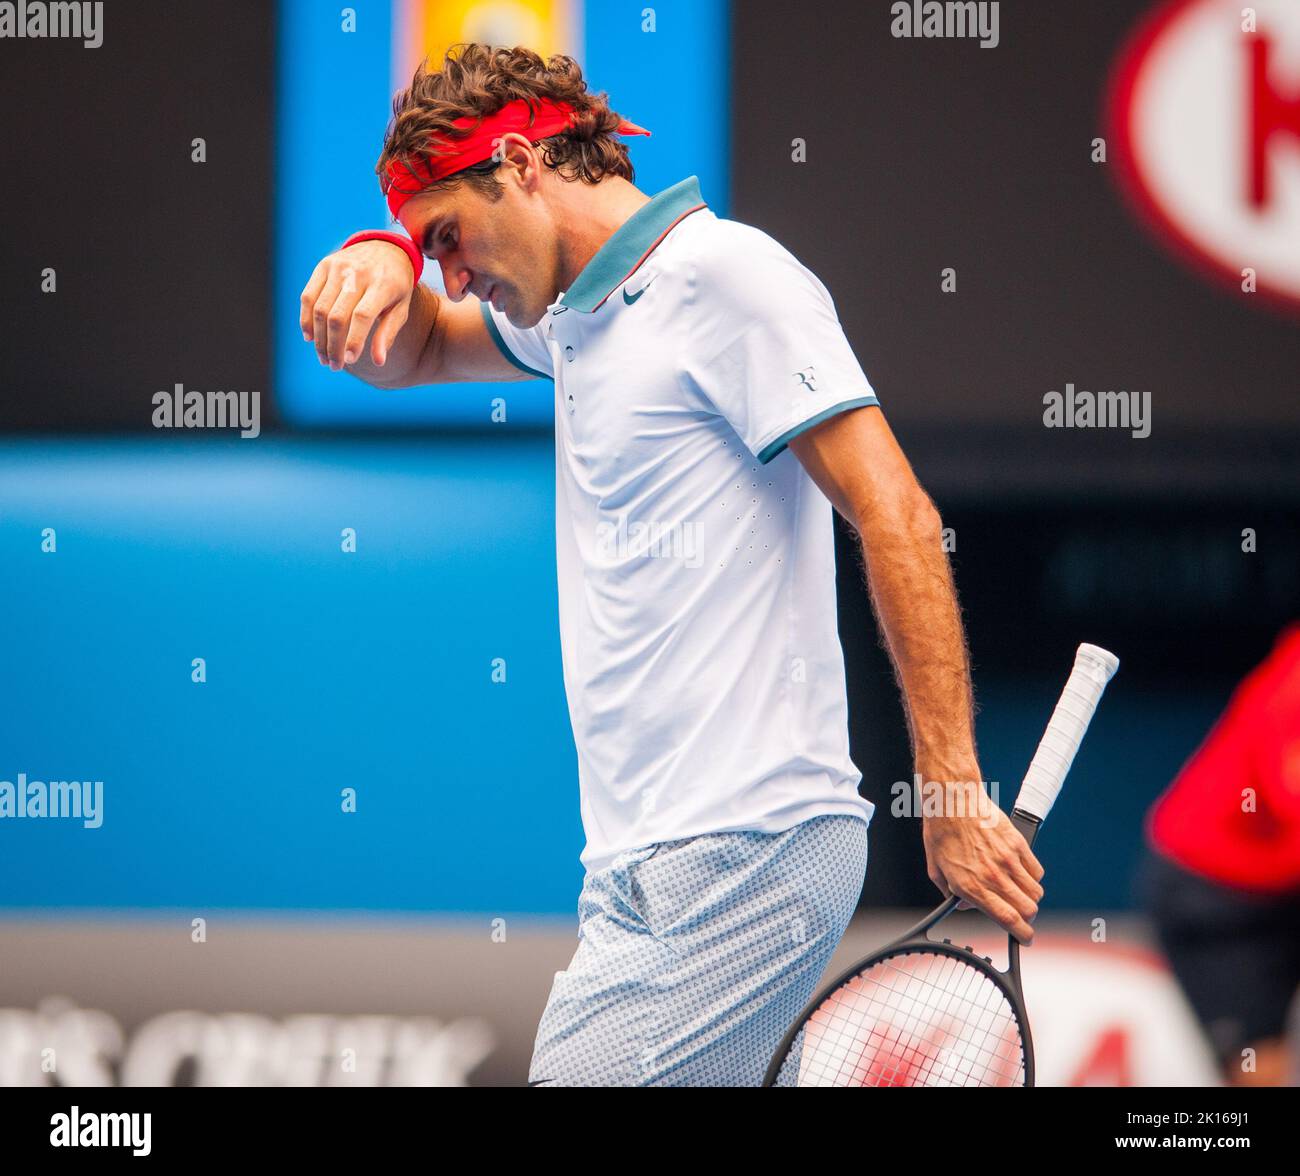 Roger Federer (SUI) stand T. Gabashvili (RUS) beim Tag 6-Spiel bei den Australian Open in Melbournes HiSense Arena gegenüber. Federer gewann gegen Gabaschwili 6-2, 6-2, 6-3. Stockfoto